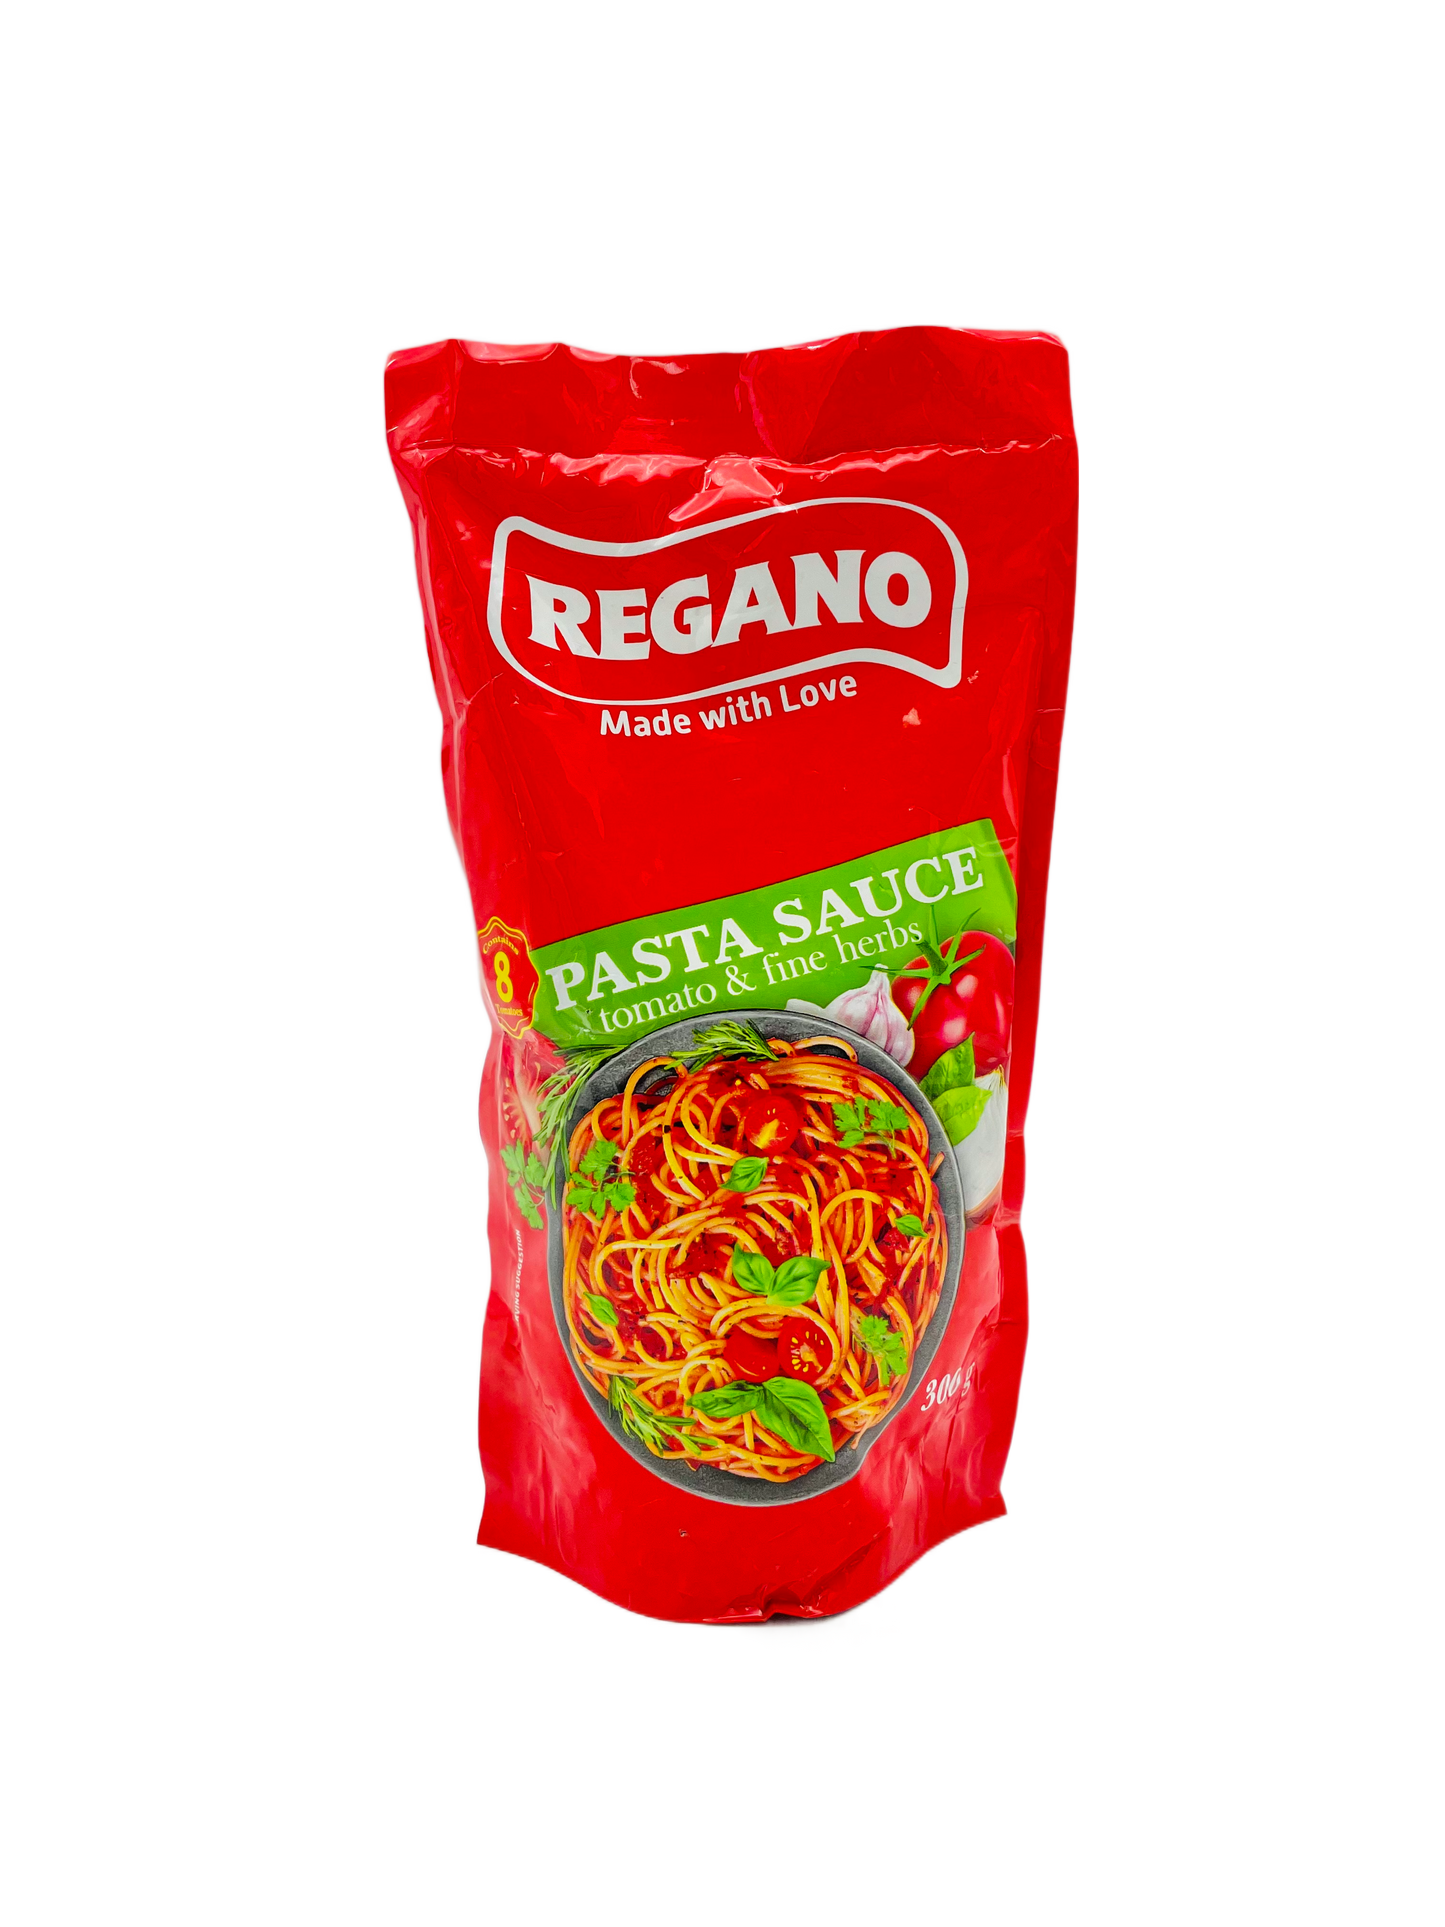 Regano Pasta Sauce Tomato & Fine Herbs 300g